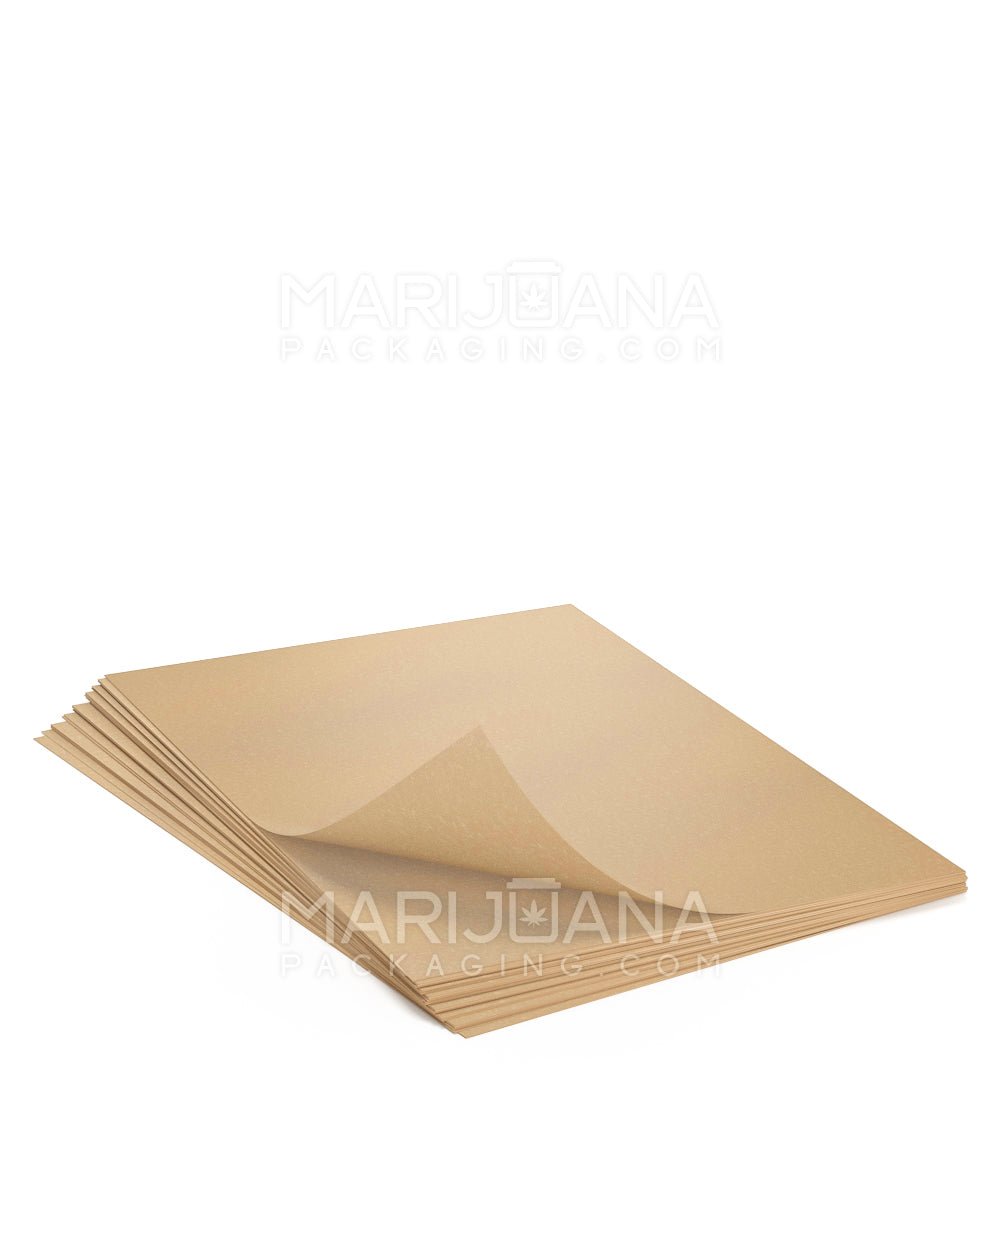 Silicone Release Parchment Paper